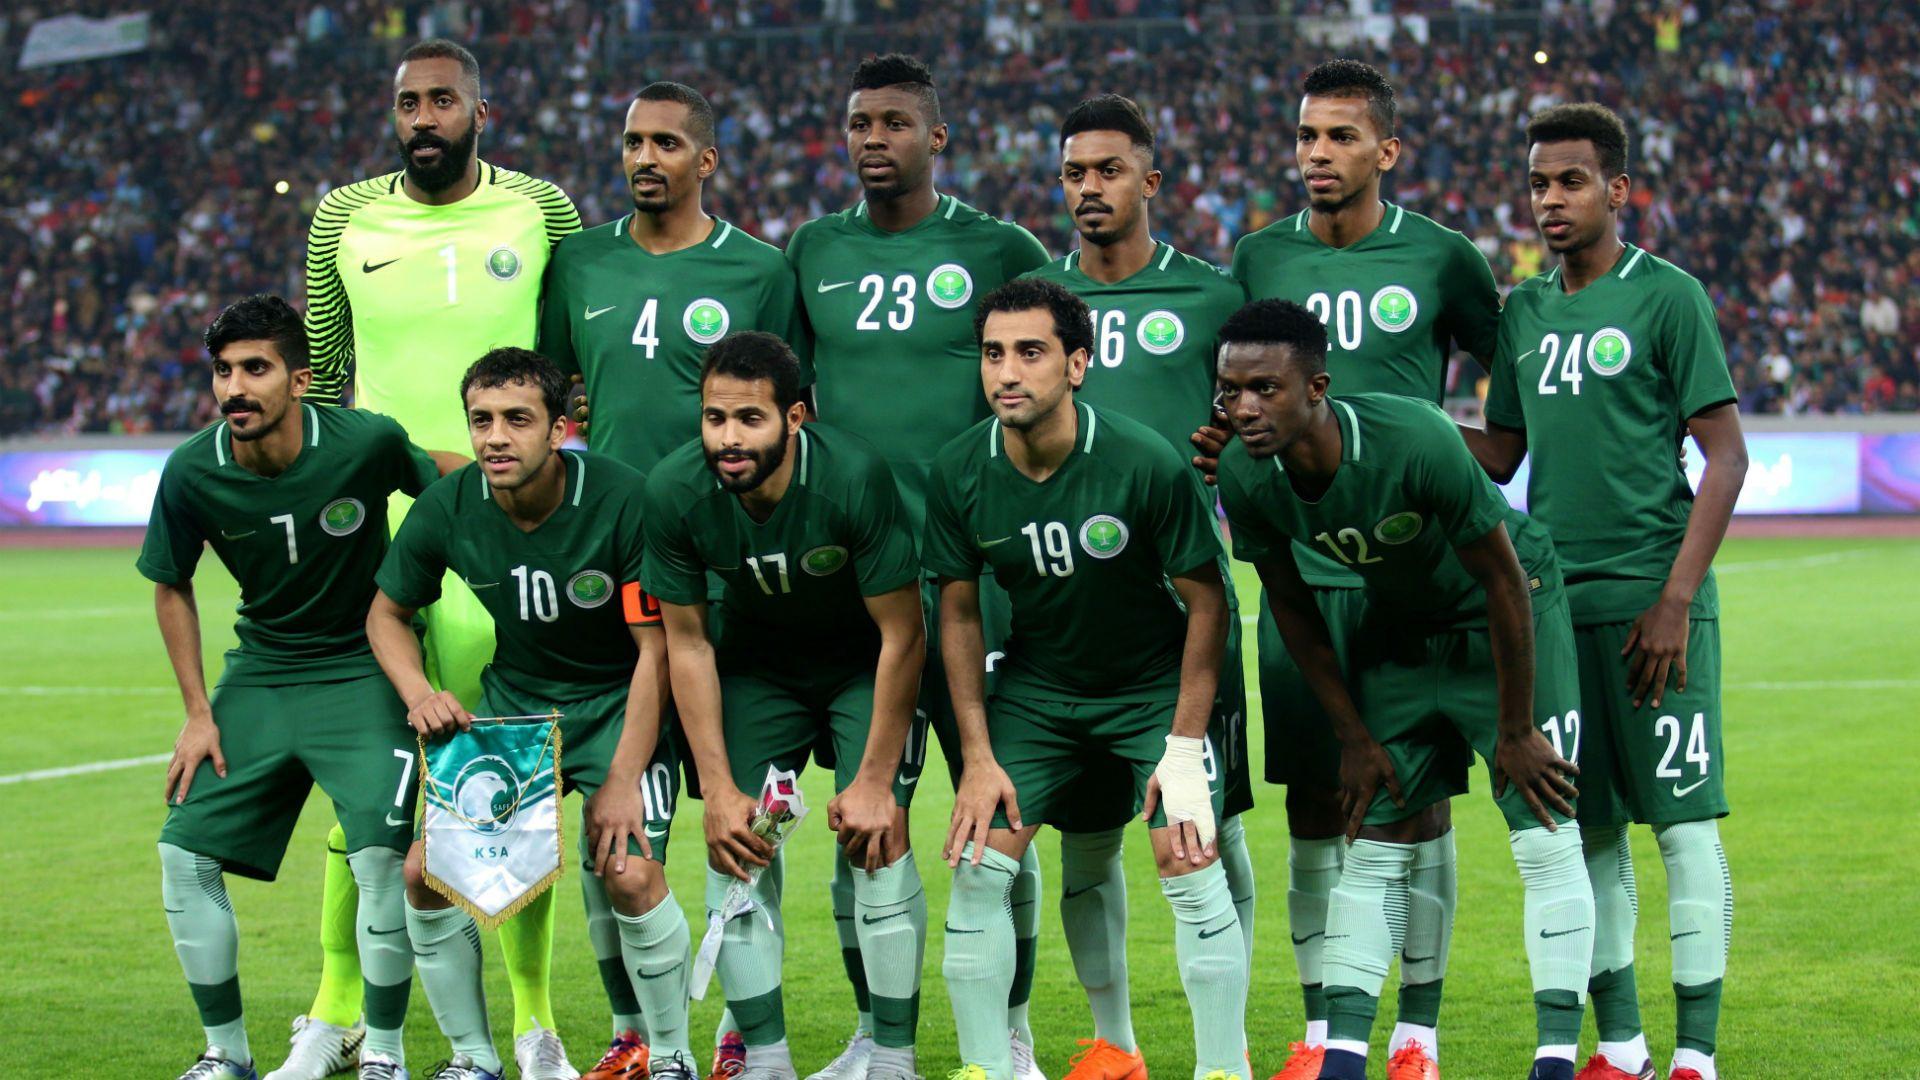 Saudi Arabia National Football Team Wallpapers